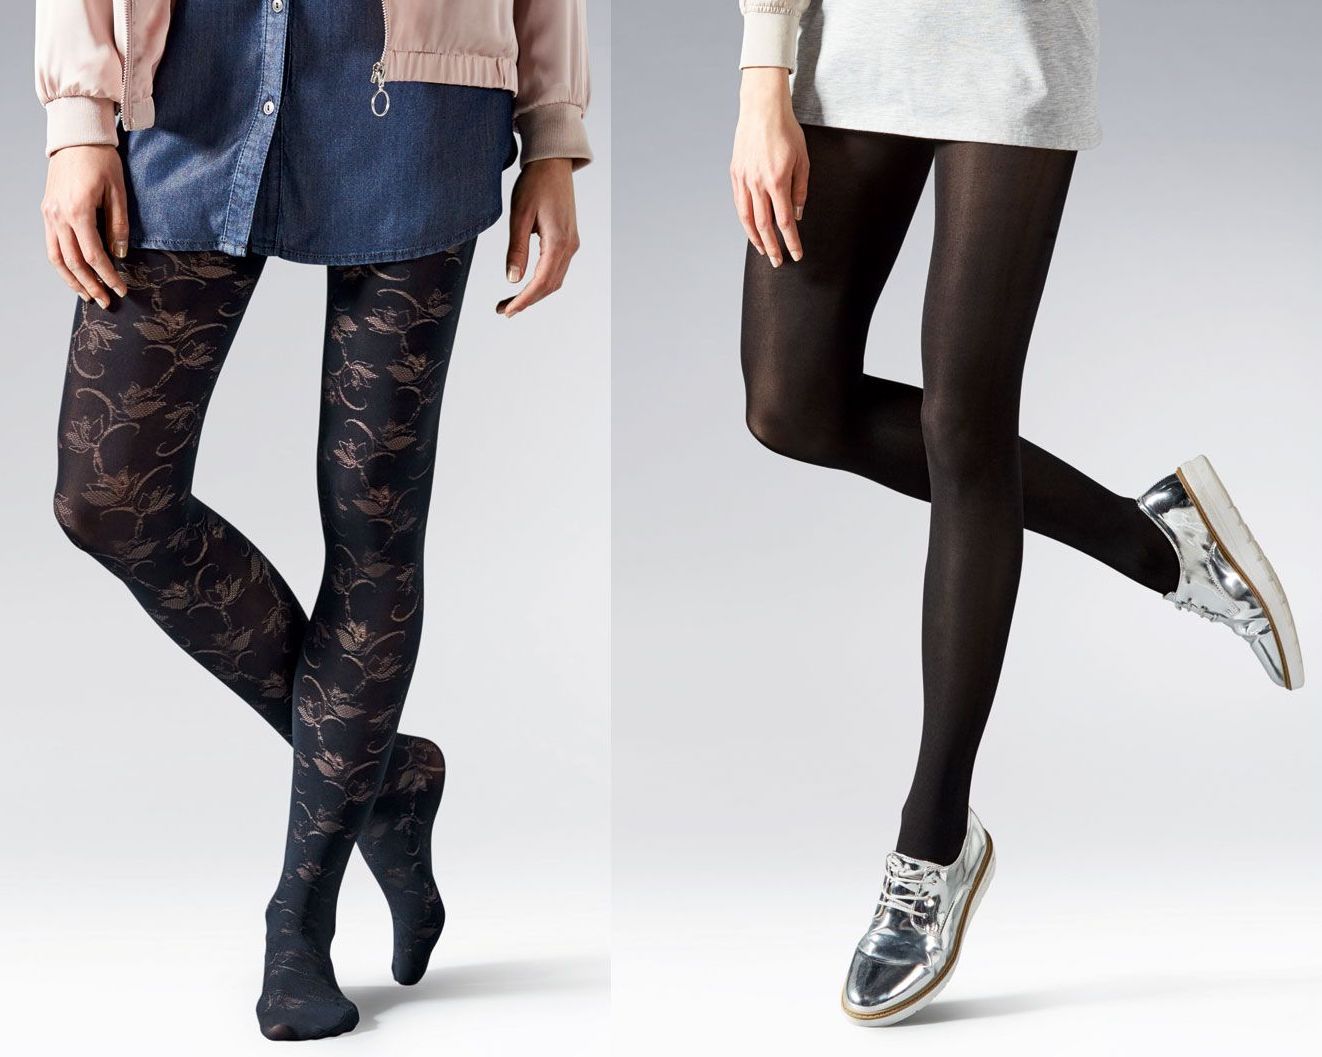 Großer Mode-WSV + VSK-frei ❄️ Jeans für 6€, Leder-Wanderschuhe für 11€,  usw. - MyTopDeals | Mode, ab 01.02.